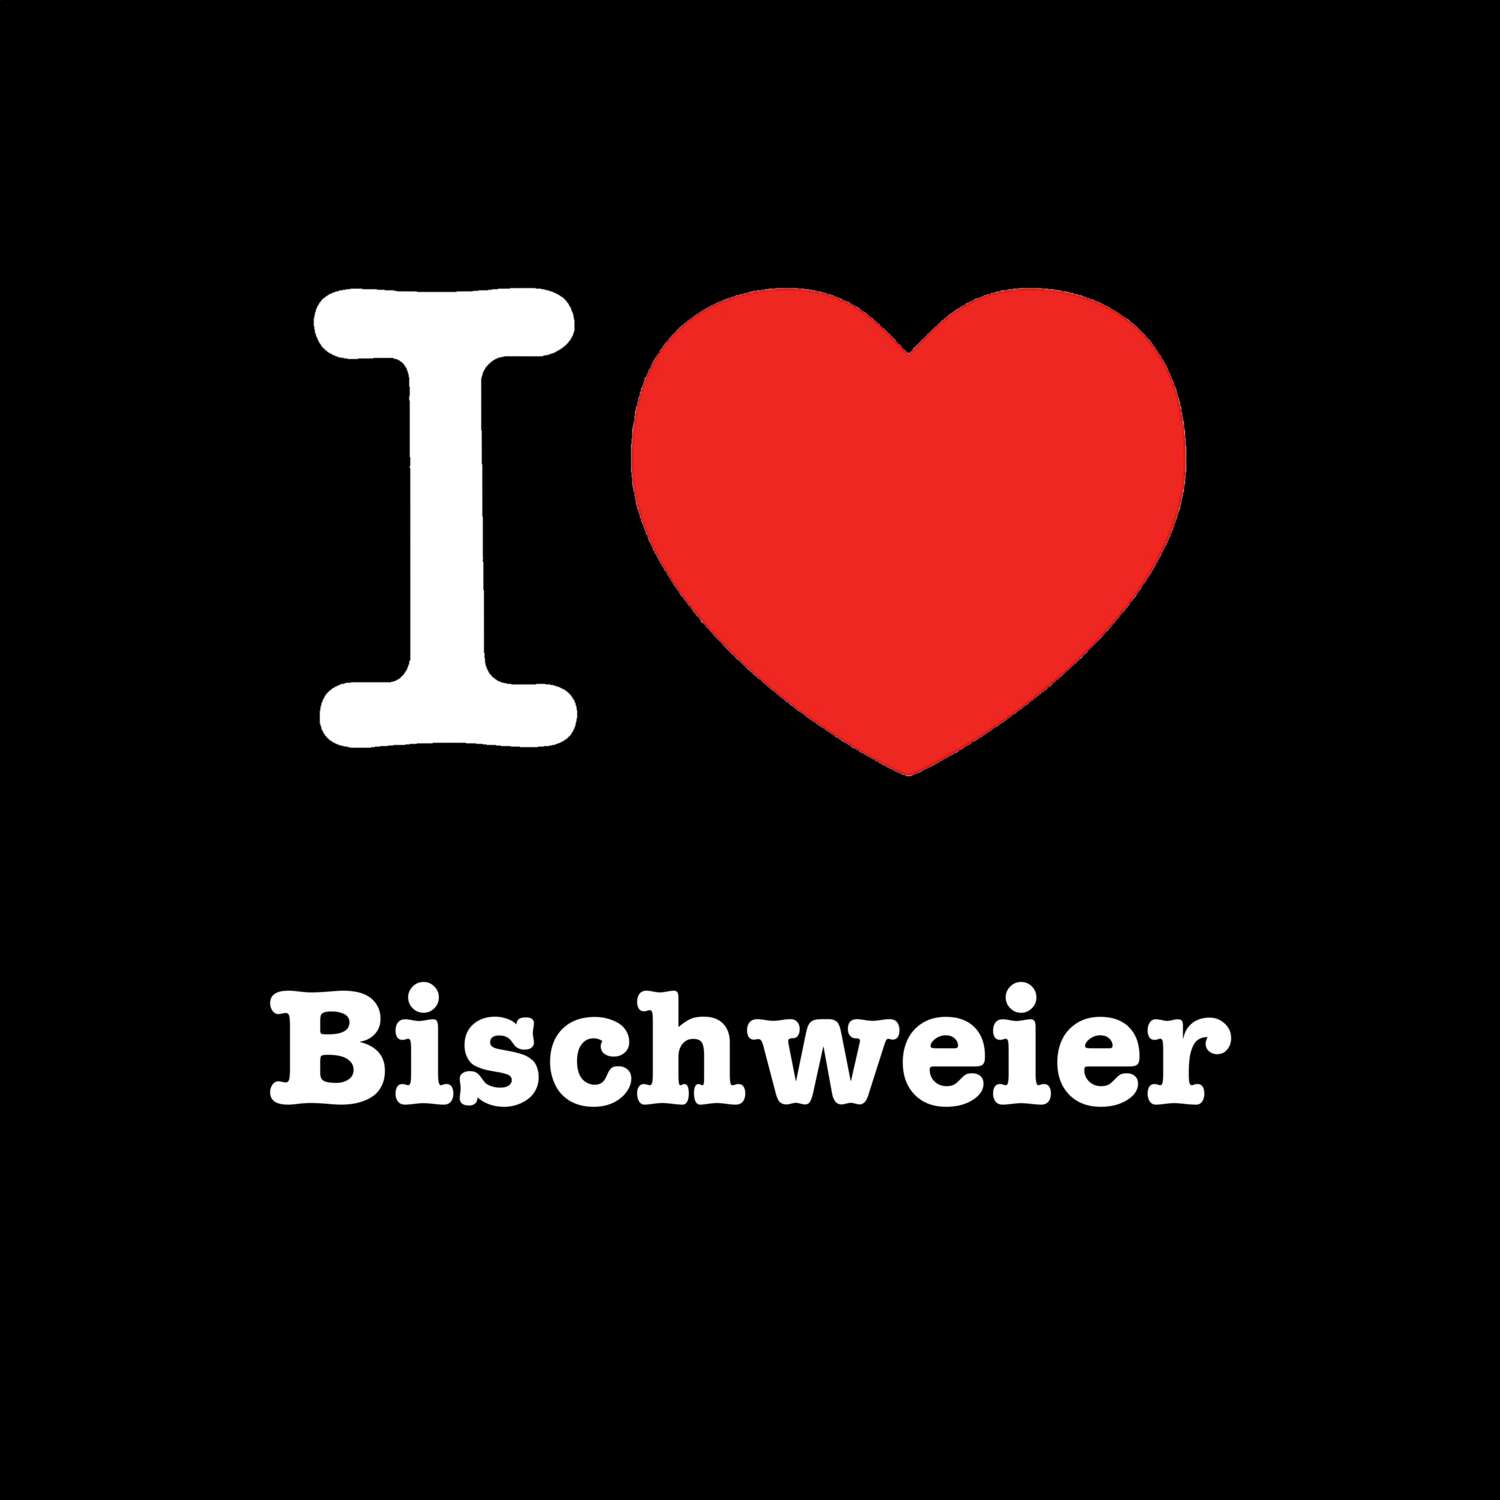 Bischweier T-Shirt »I love«